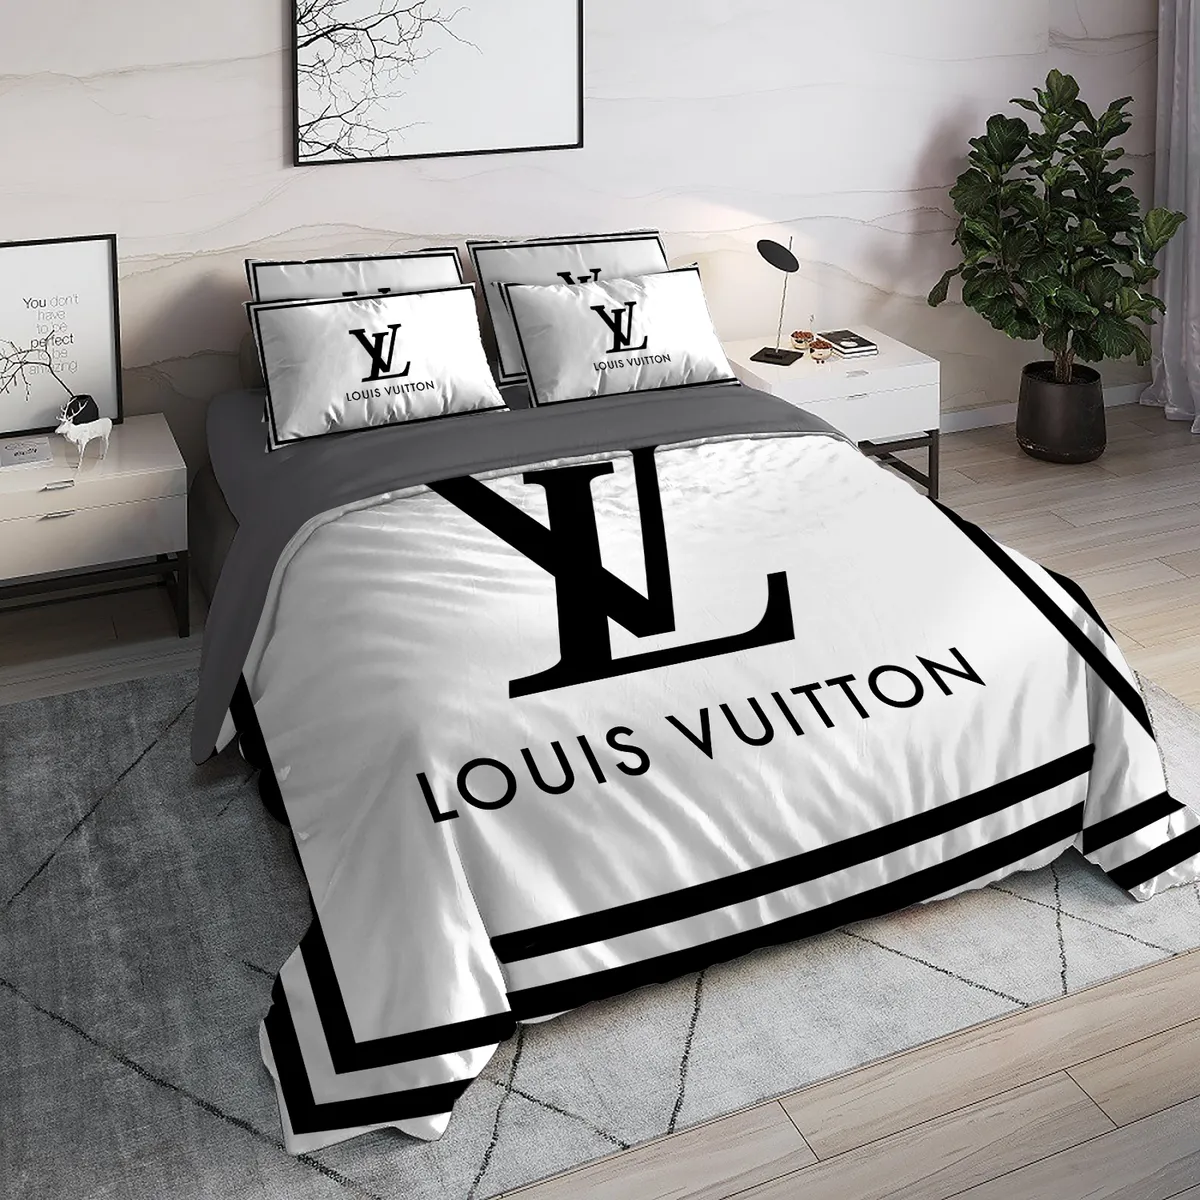 Louis Vuitton White Logo Brand Bedding Set Bedroom Home Decor Bedspread Luxury